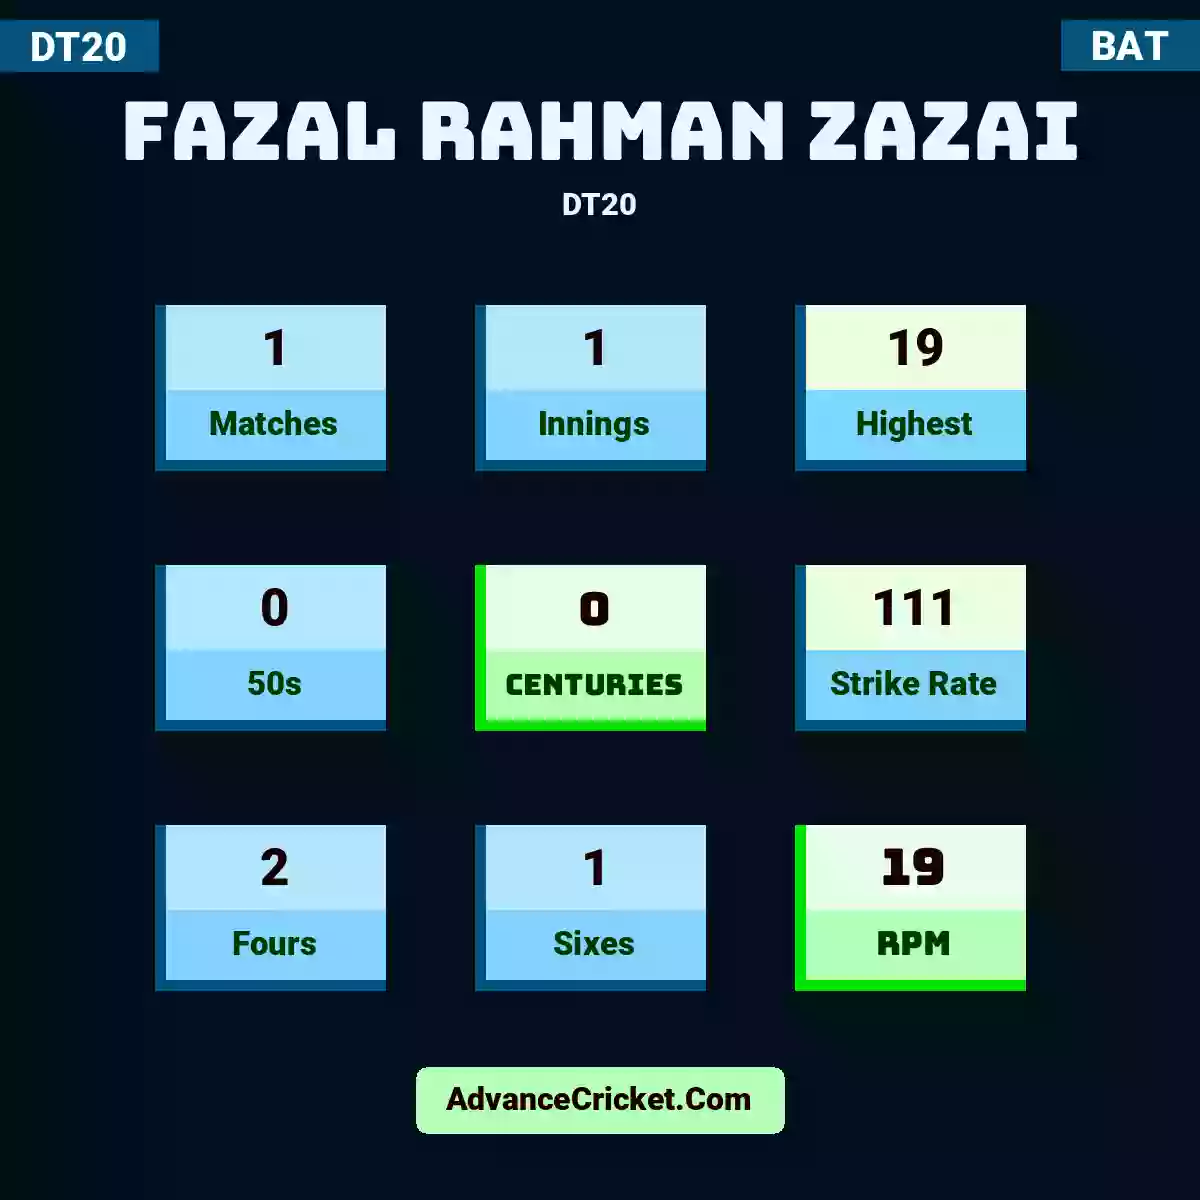 Fazal Rahman Zazai DT20 , Fazal Rahman Zazai played 1 matches, scored 19 runs as highest, 0 half-centuries, and 0 centuries, with a strike rate of 111. F.Zazai hit 2 fours and 1 sixes, with an RPM of 19.